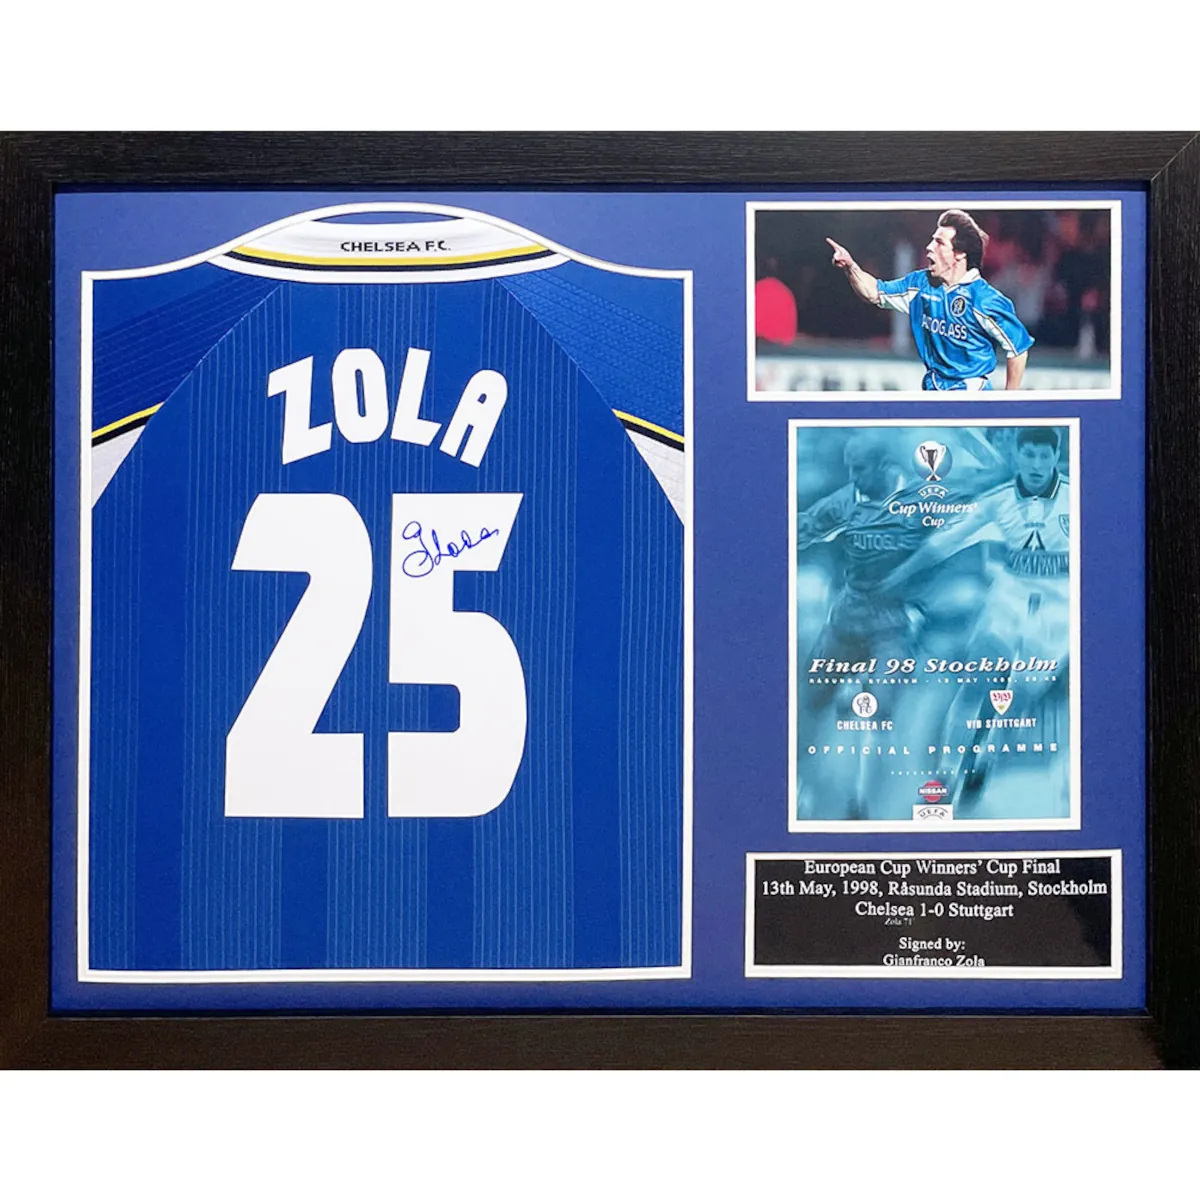 TM-04643 Chelsea F.C. Gianfranco Zola Framed Signed 1998 Season Replica Football Shirt